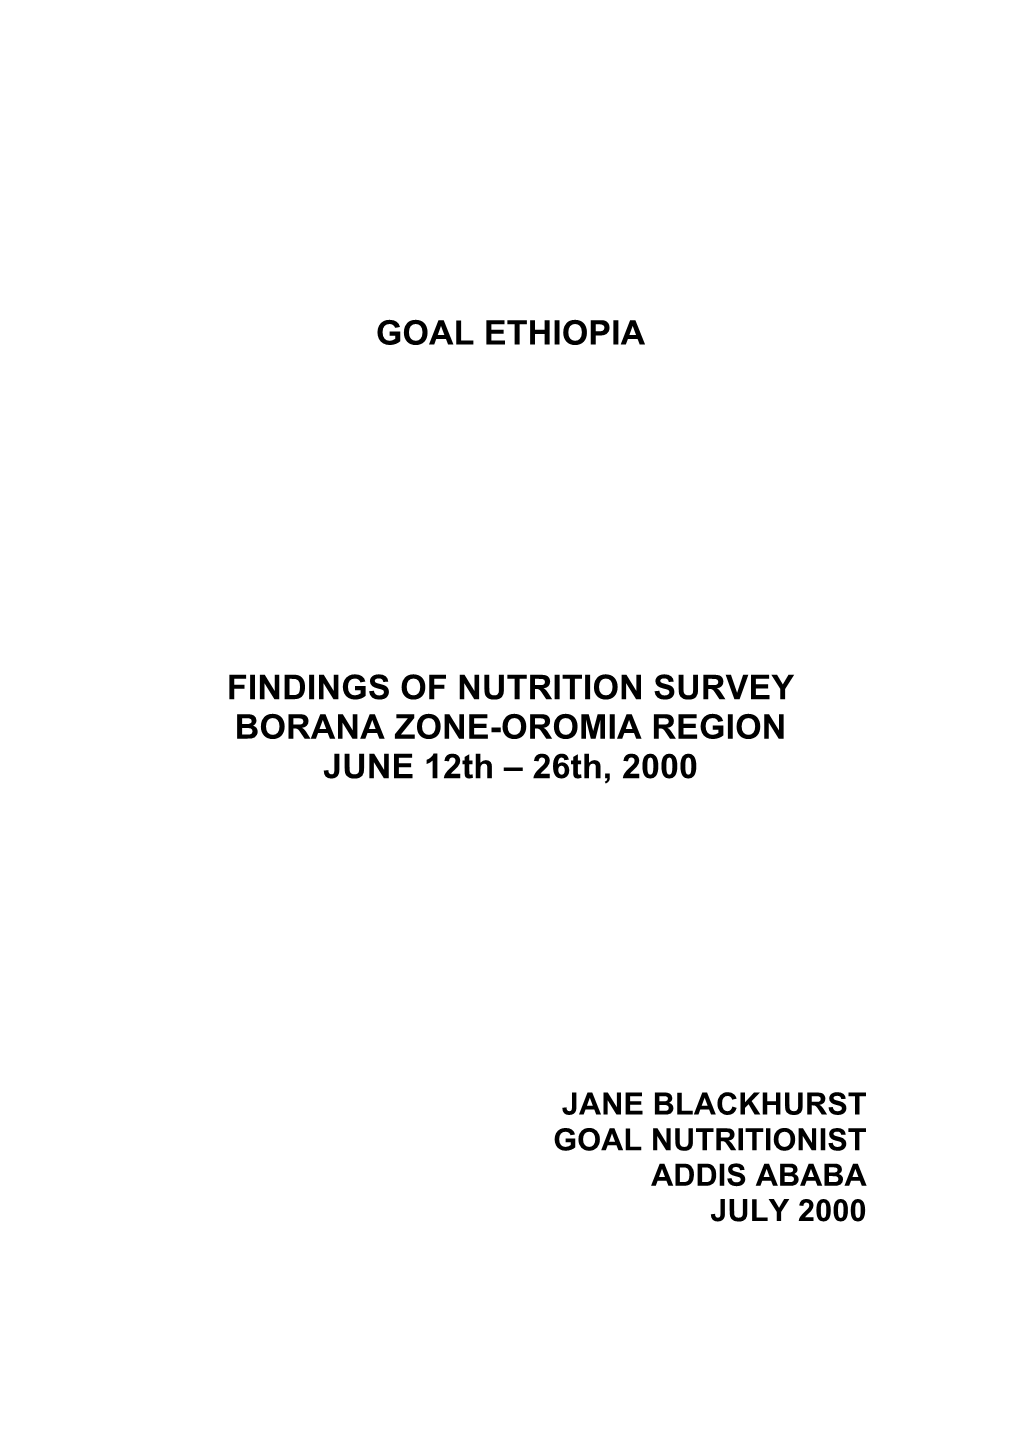 Goal Ethiopia Findings of Nutrition Survey Borana